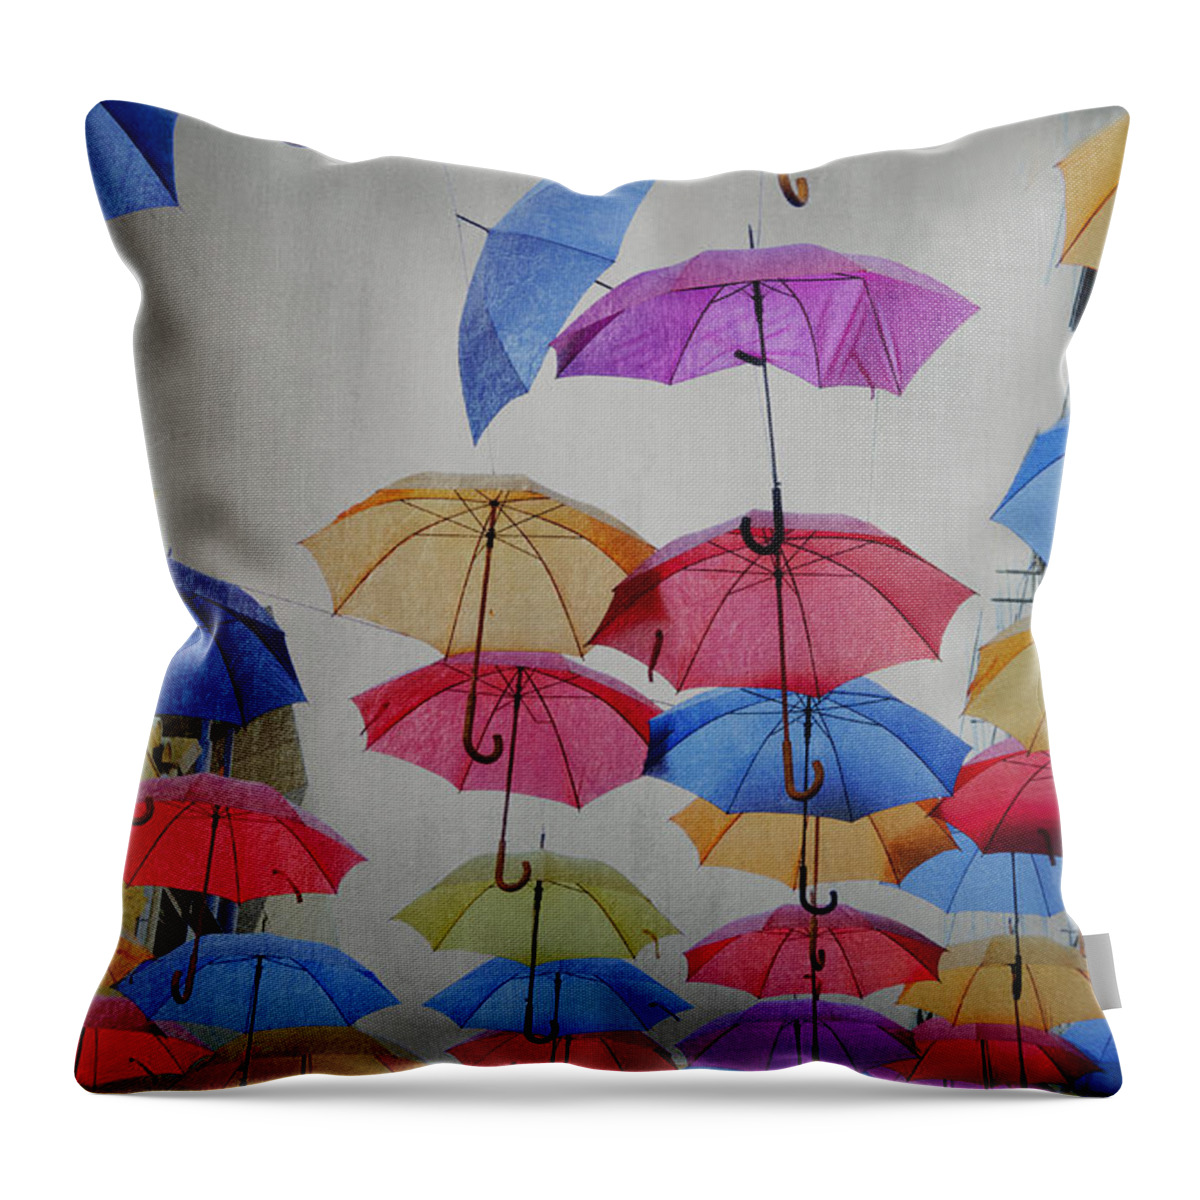 Art Throw Pillow featuring the photograph Umbrellas by Jelena Jovanovic